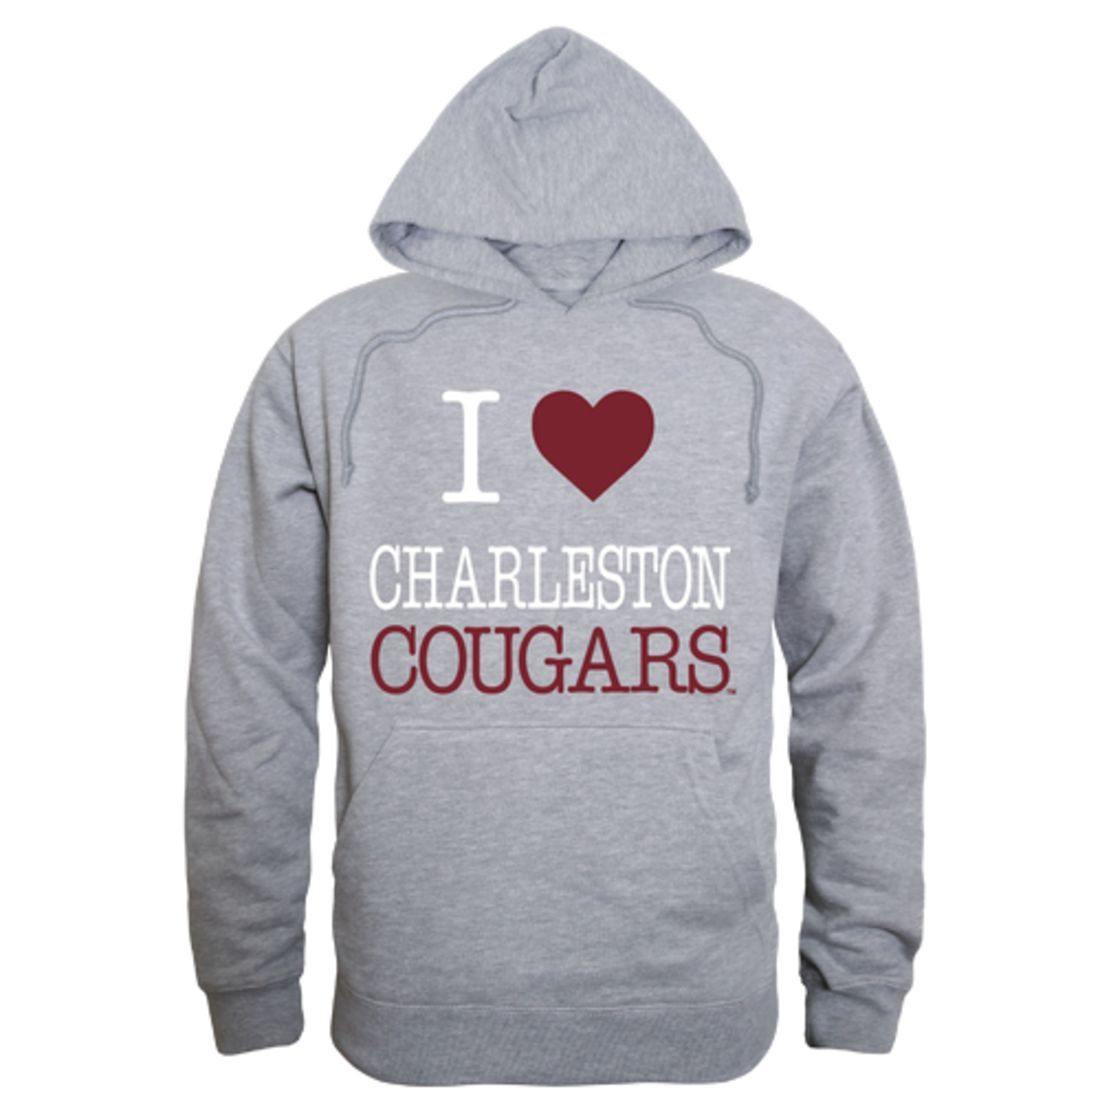 I Love COFC College of Charleston Cougars Hoodie Sweatshirt-Campus-Wardrobe